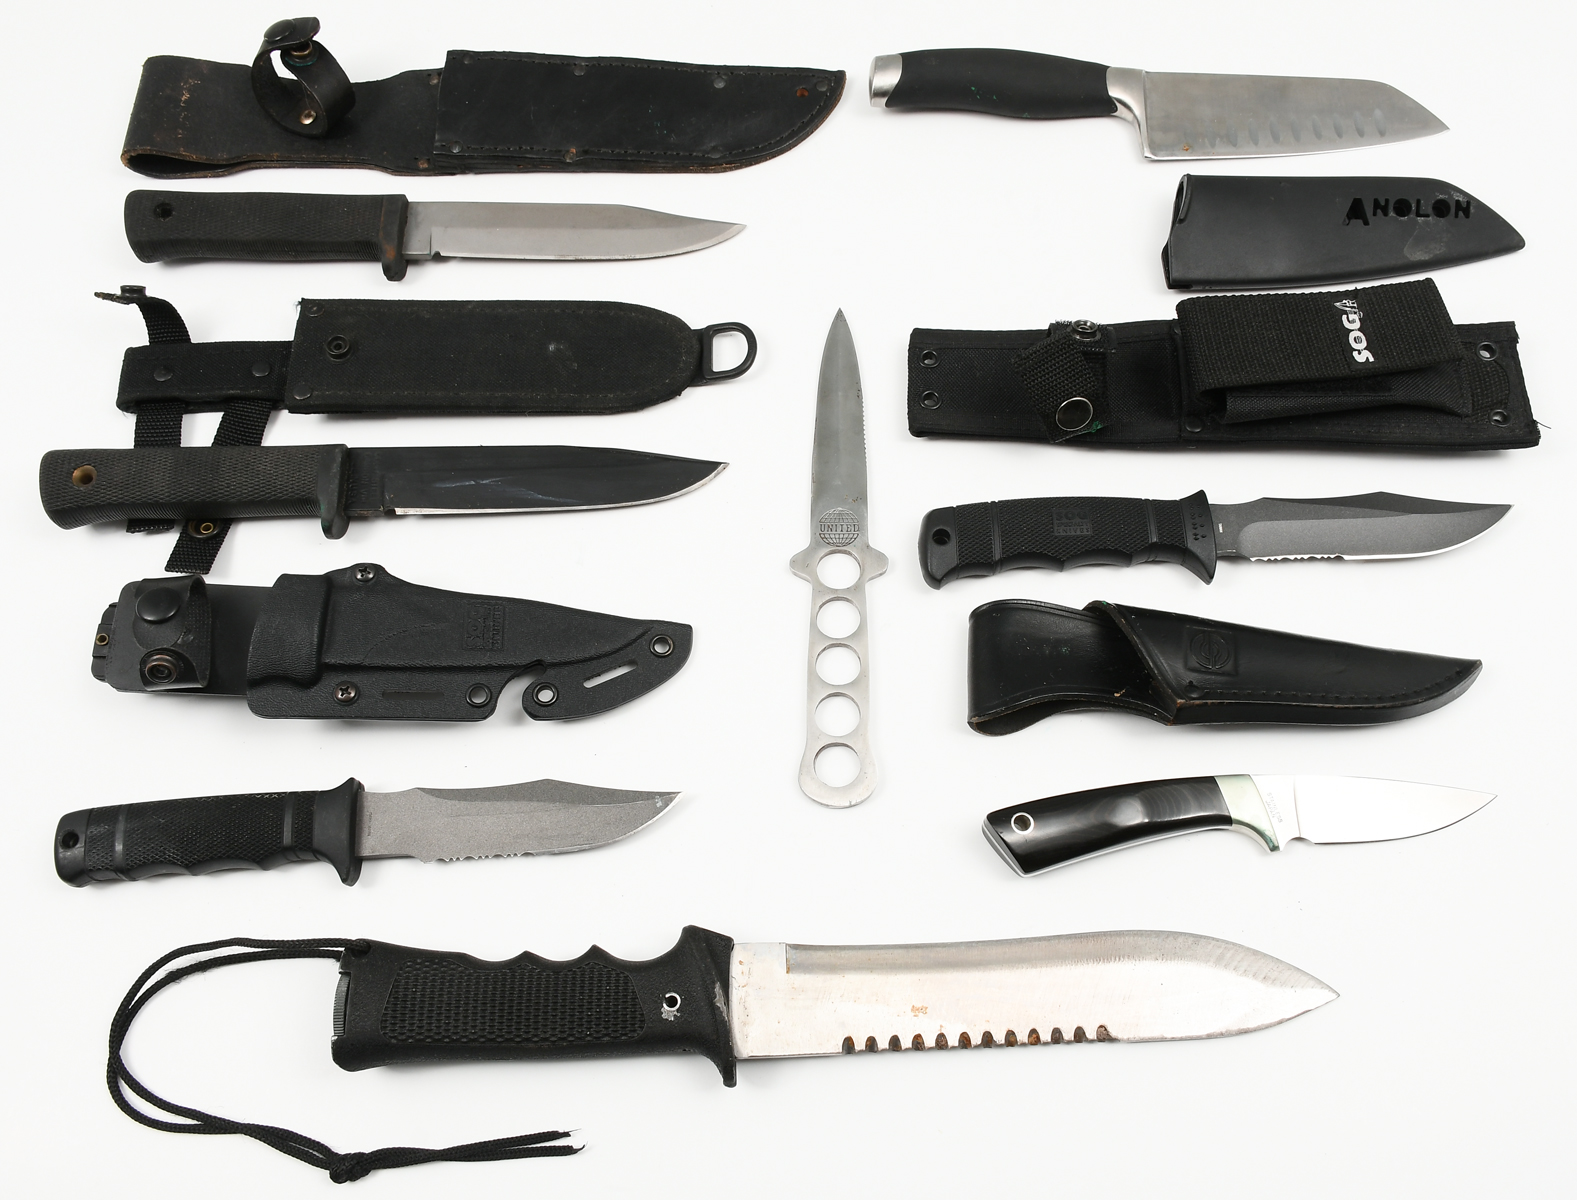 8PC. LARGE KNIFE LOT: 1) Survival-type